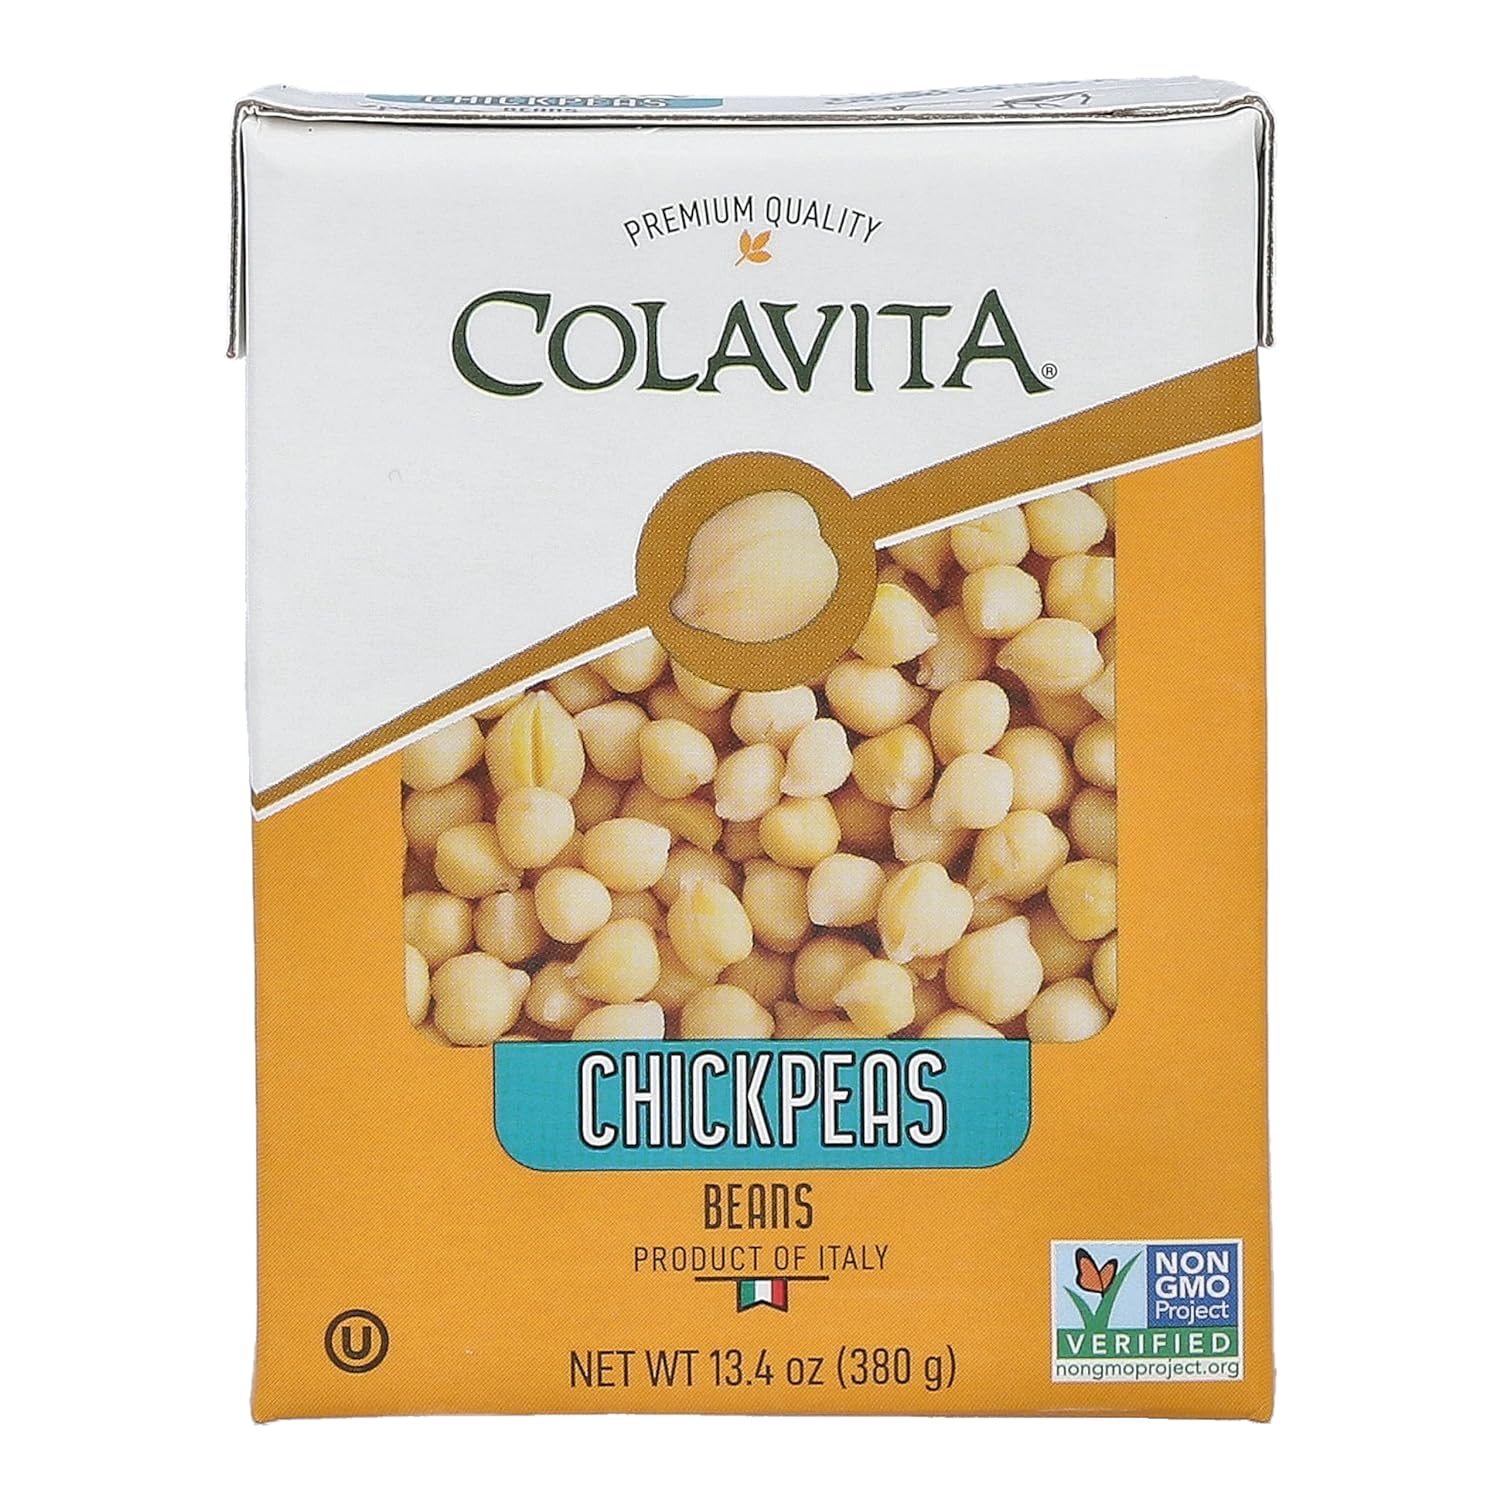 COLAVITA Chickpeas 12x13.4oz (380g) Carton